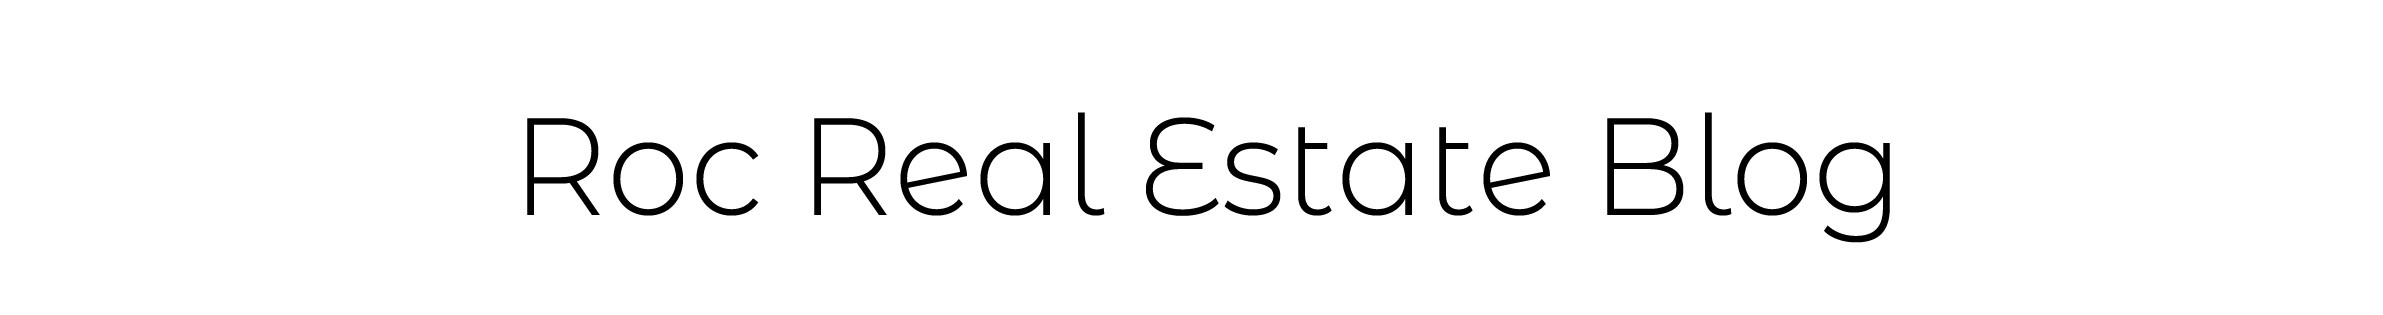 Roc Real Estate Blog